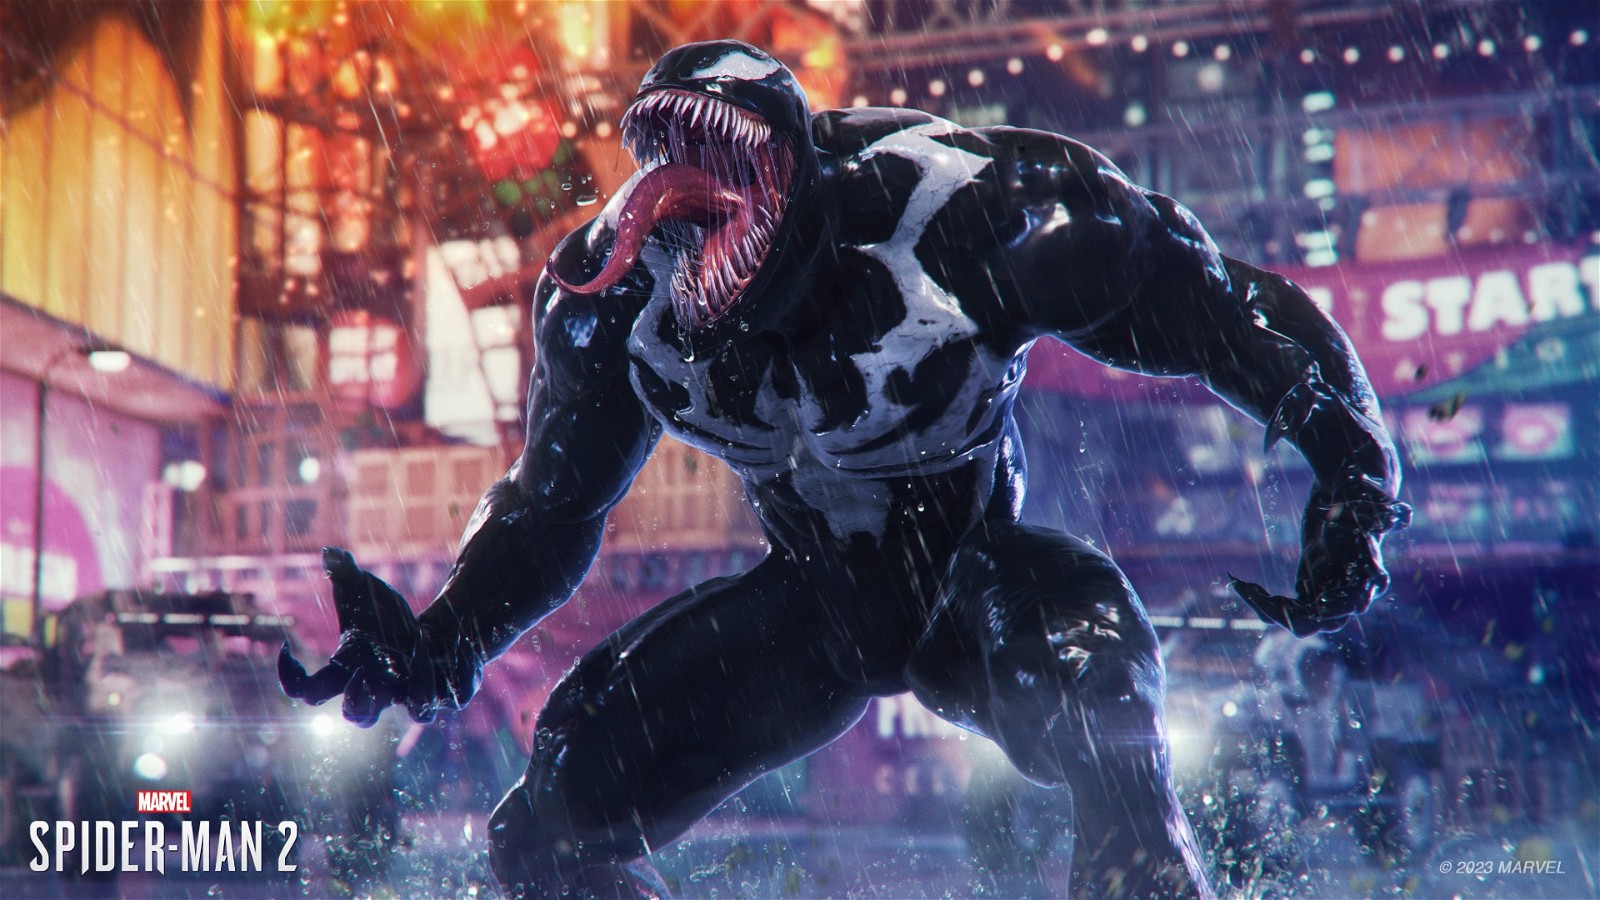 Spider-Man 2 features Venom and Kraven the Hunter